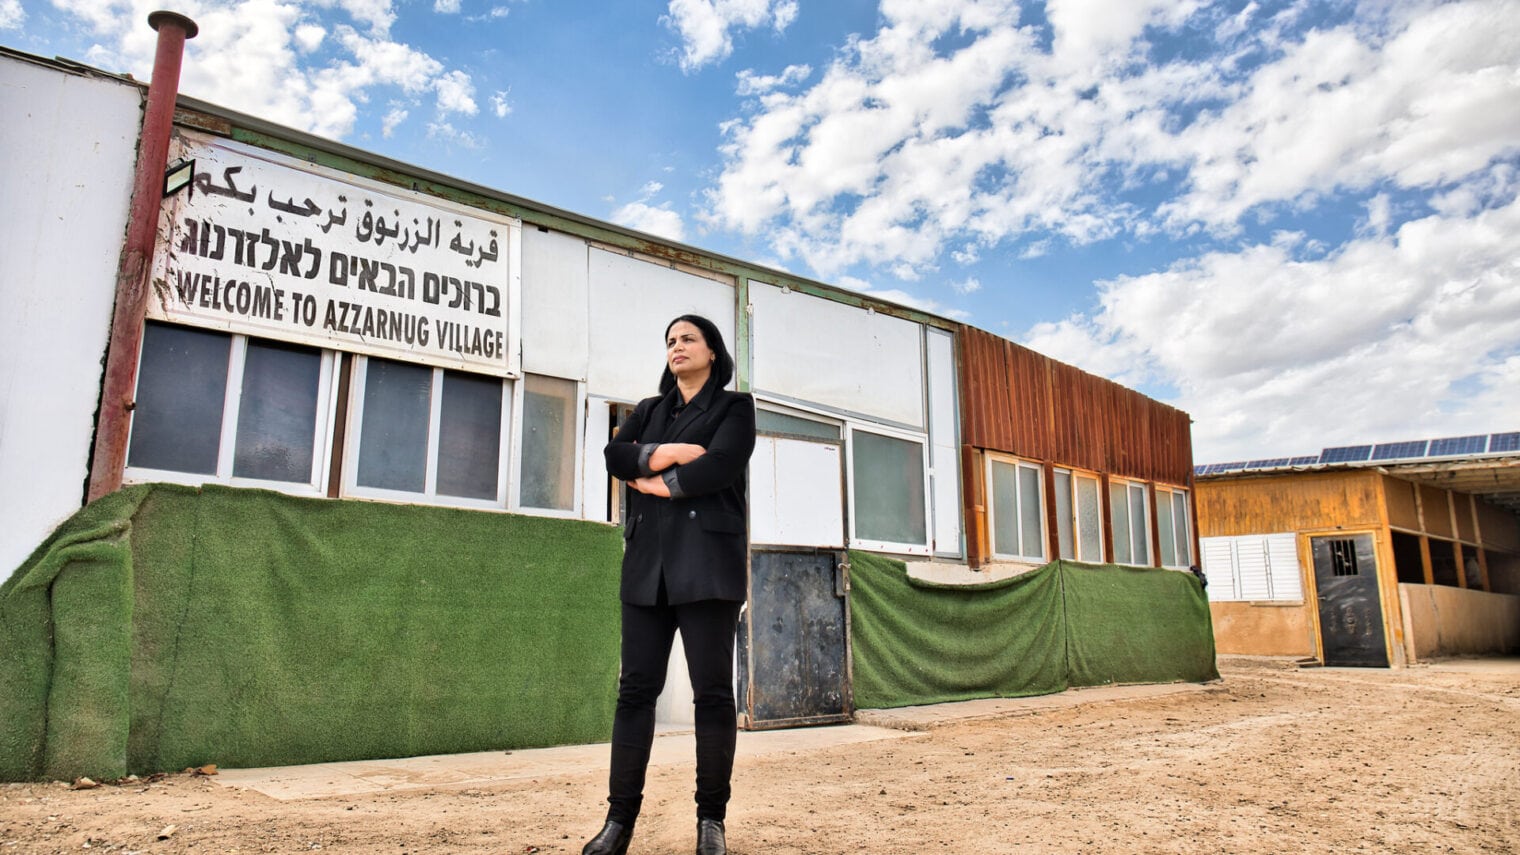 Bedouin attorney, Hanan Alsanah, at the unrecognized village of Az-Zarnug in the Negev desert. Photo by Noam Chen